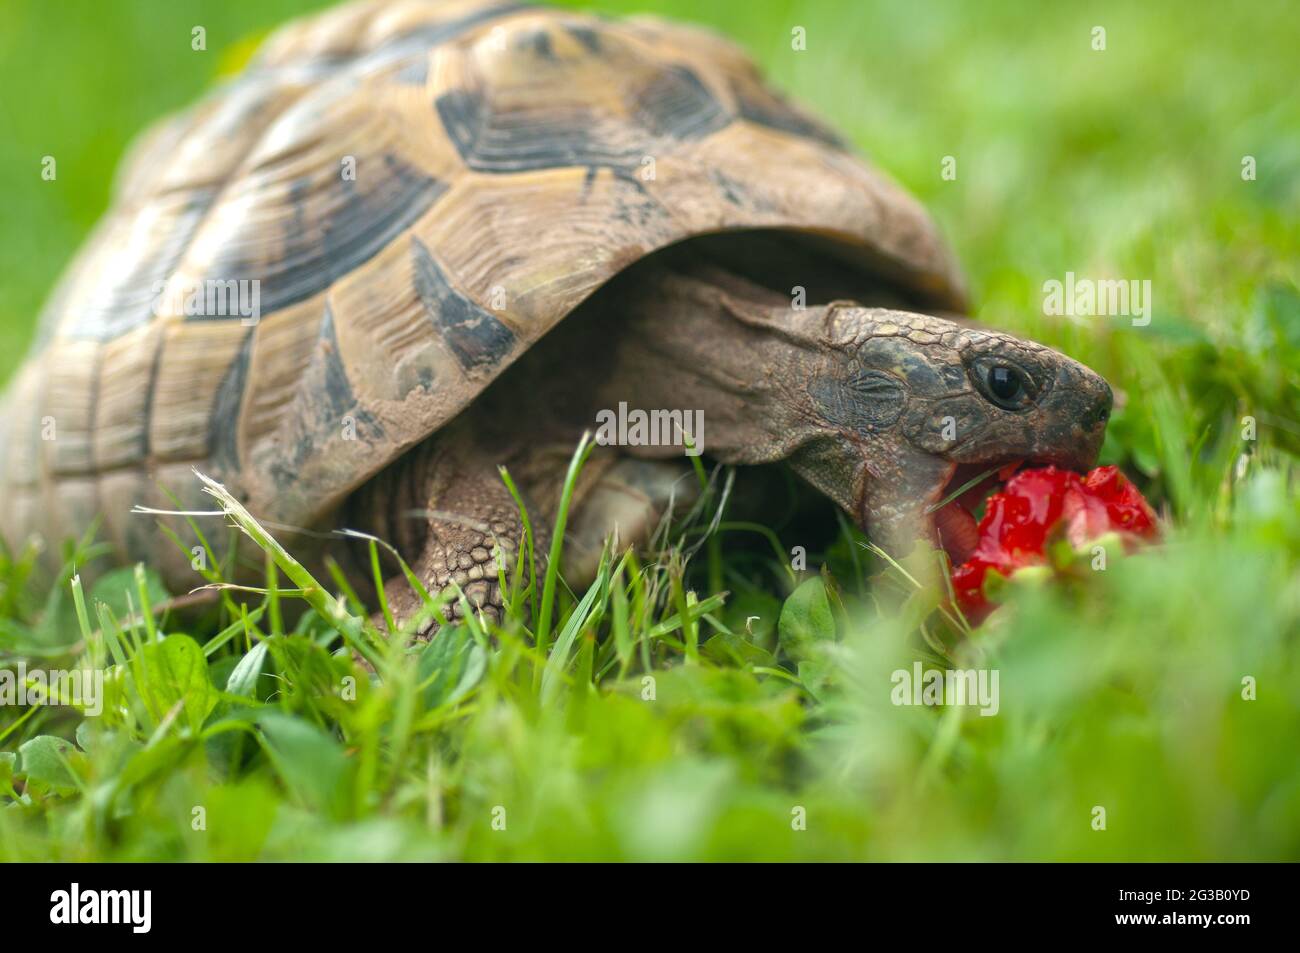 Turtles strawberries hunger Stock Photo